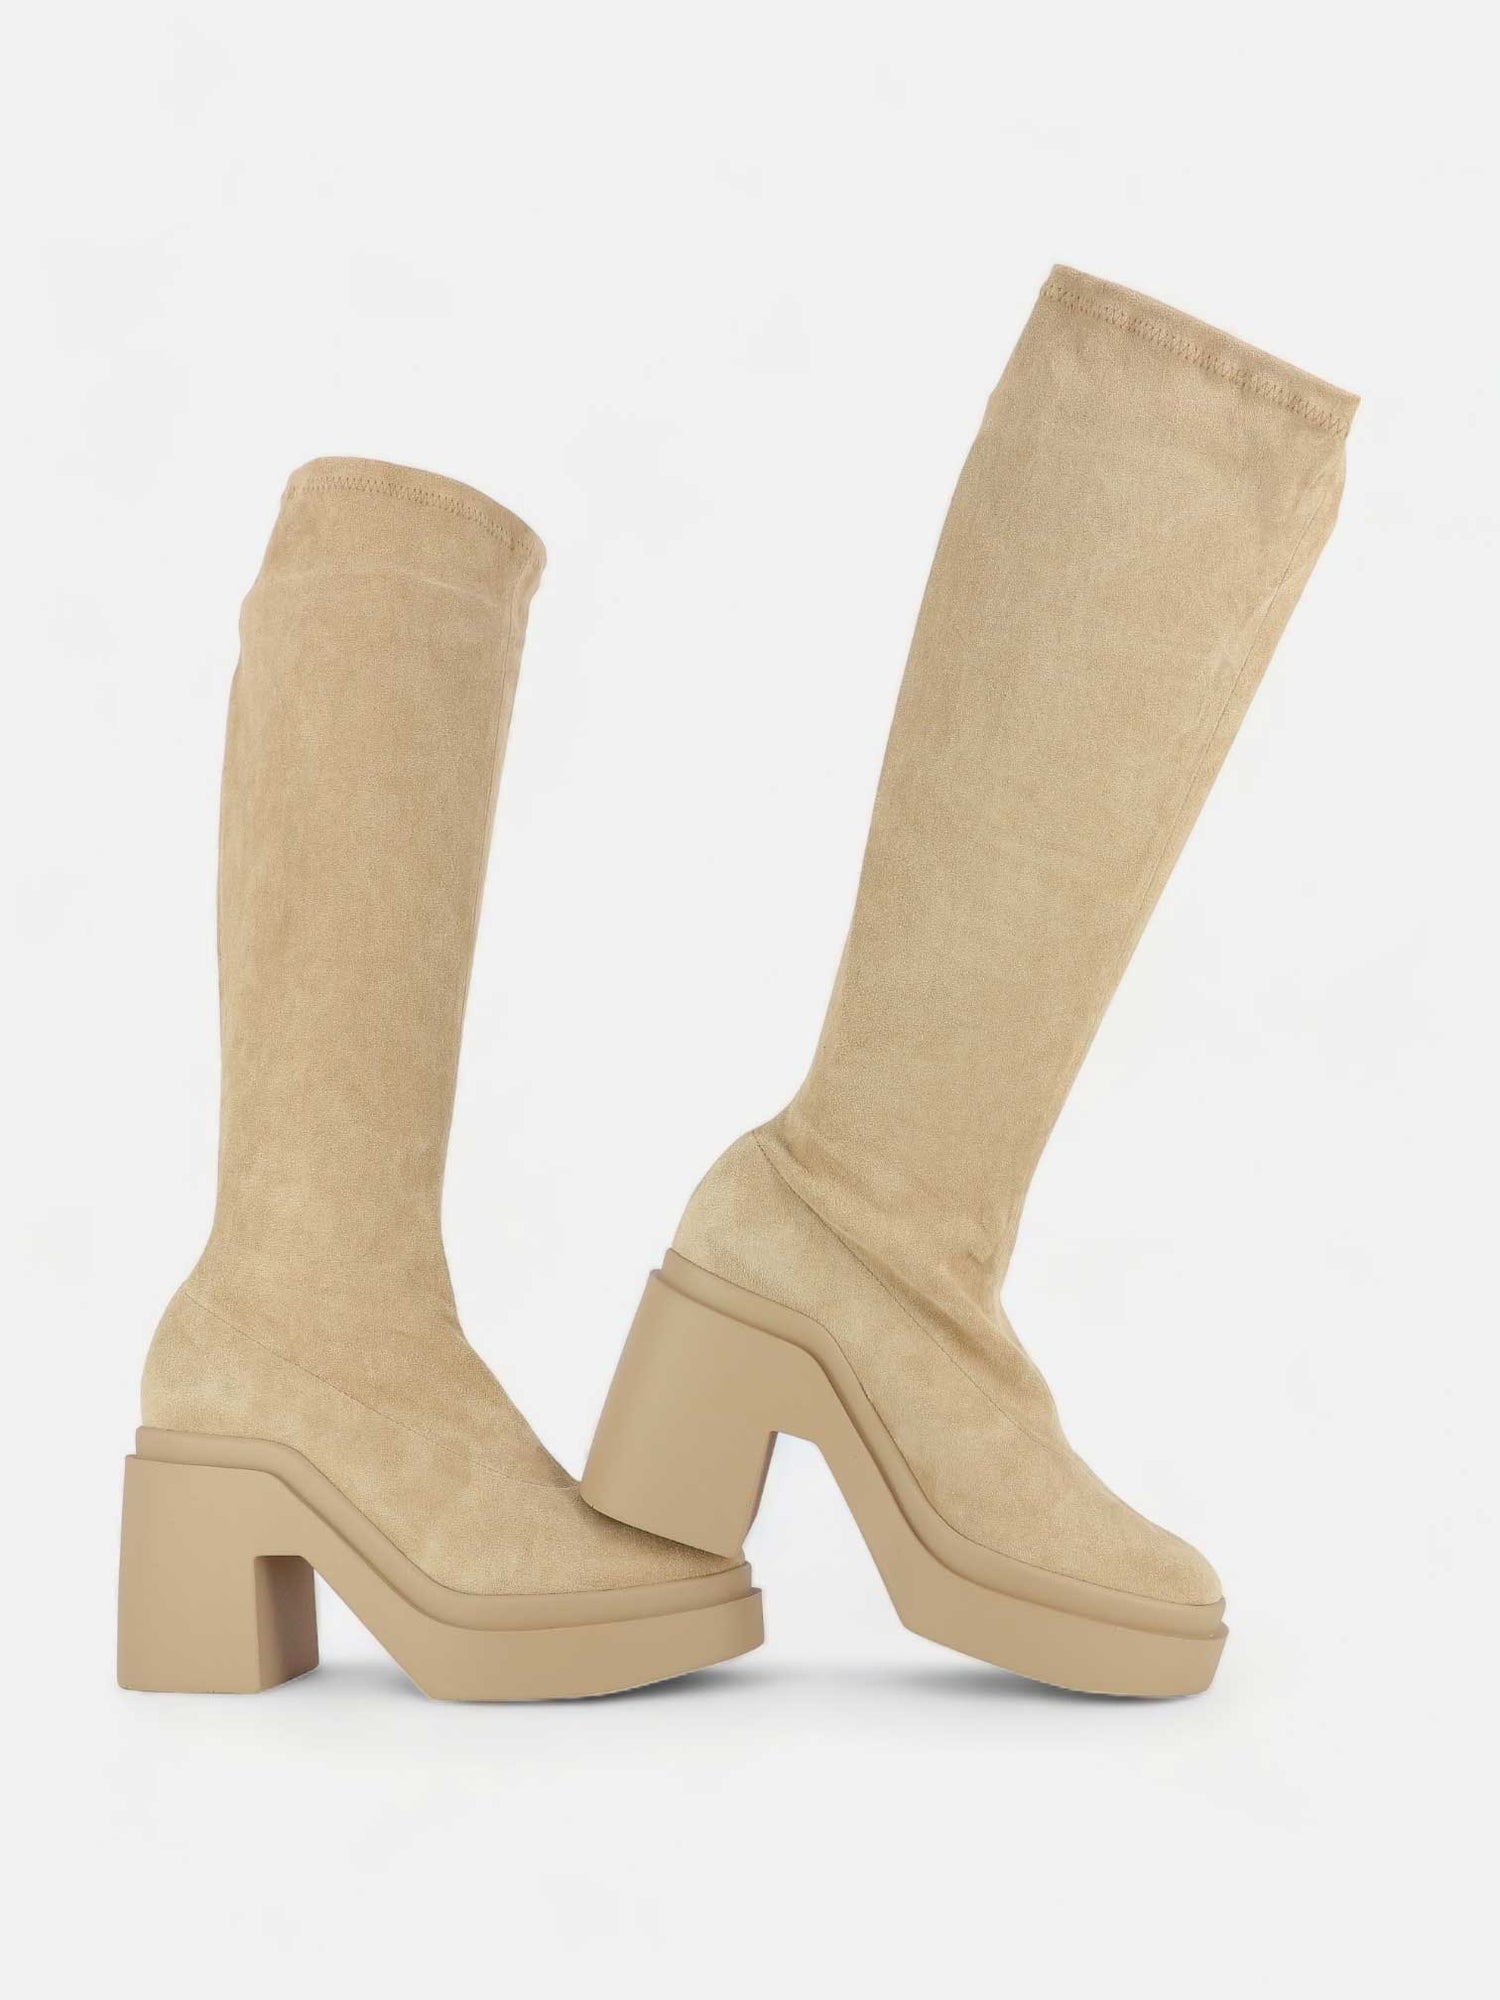 HIGH BOOTS - NALINI boots, stretch suede lambskin beige - 3606063818629 - Clergerie Paris - Europe